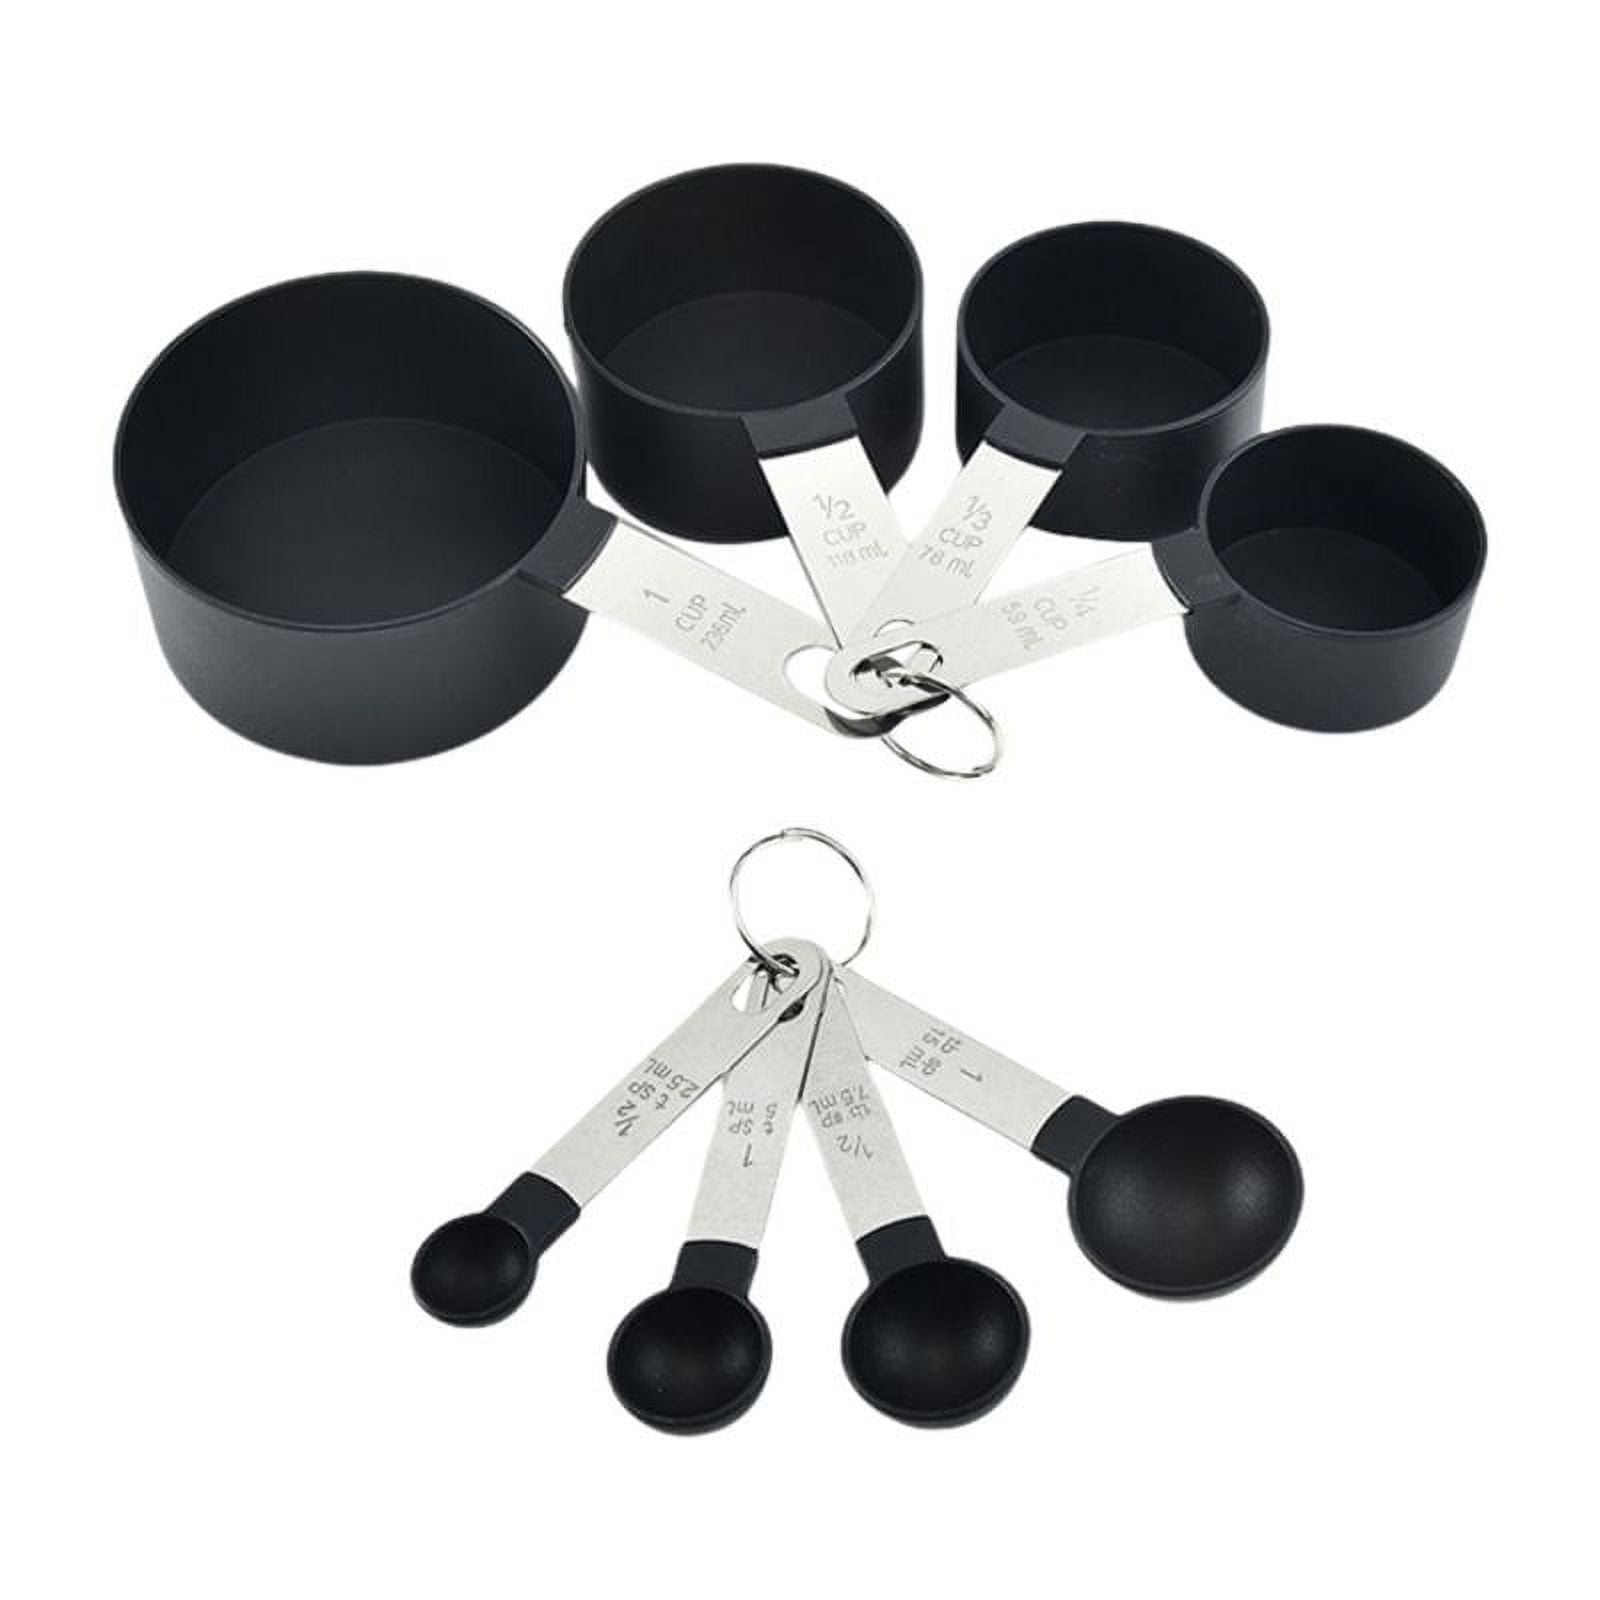 8 Pc Farmhouse Measuring Spoon & Measuring Cup set - Black